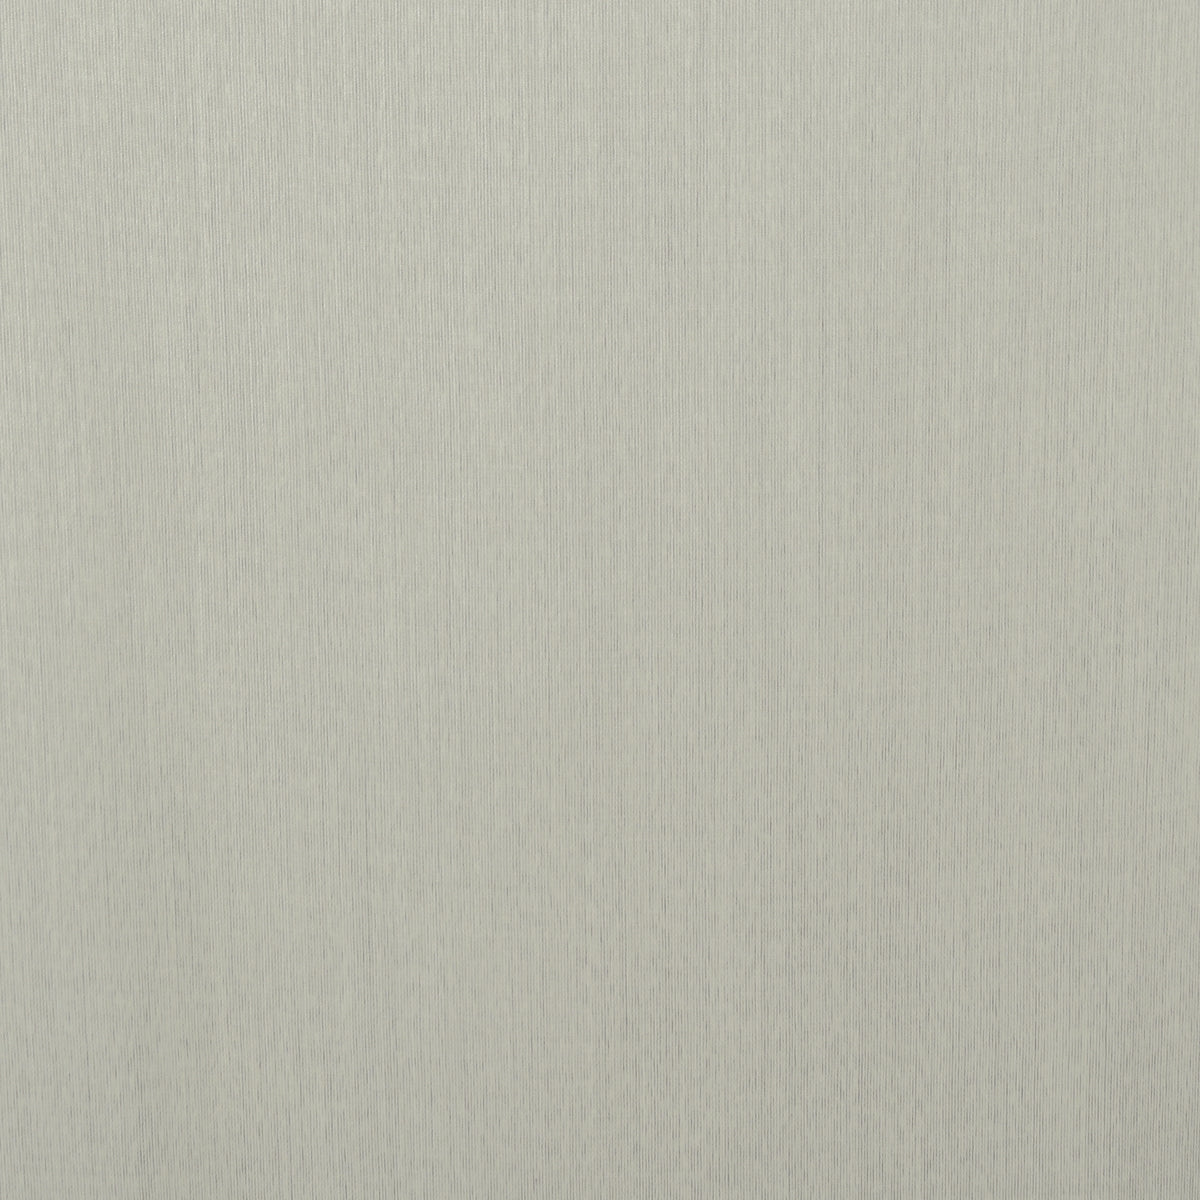 Night curtain beige gray Nawal